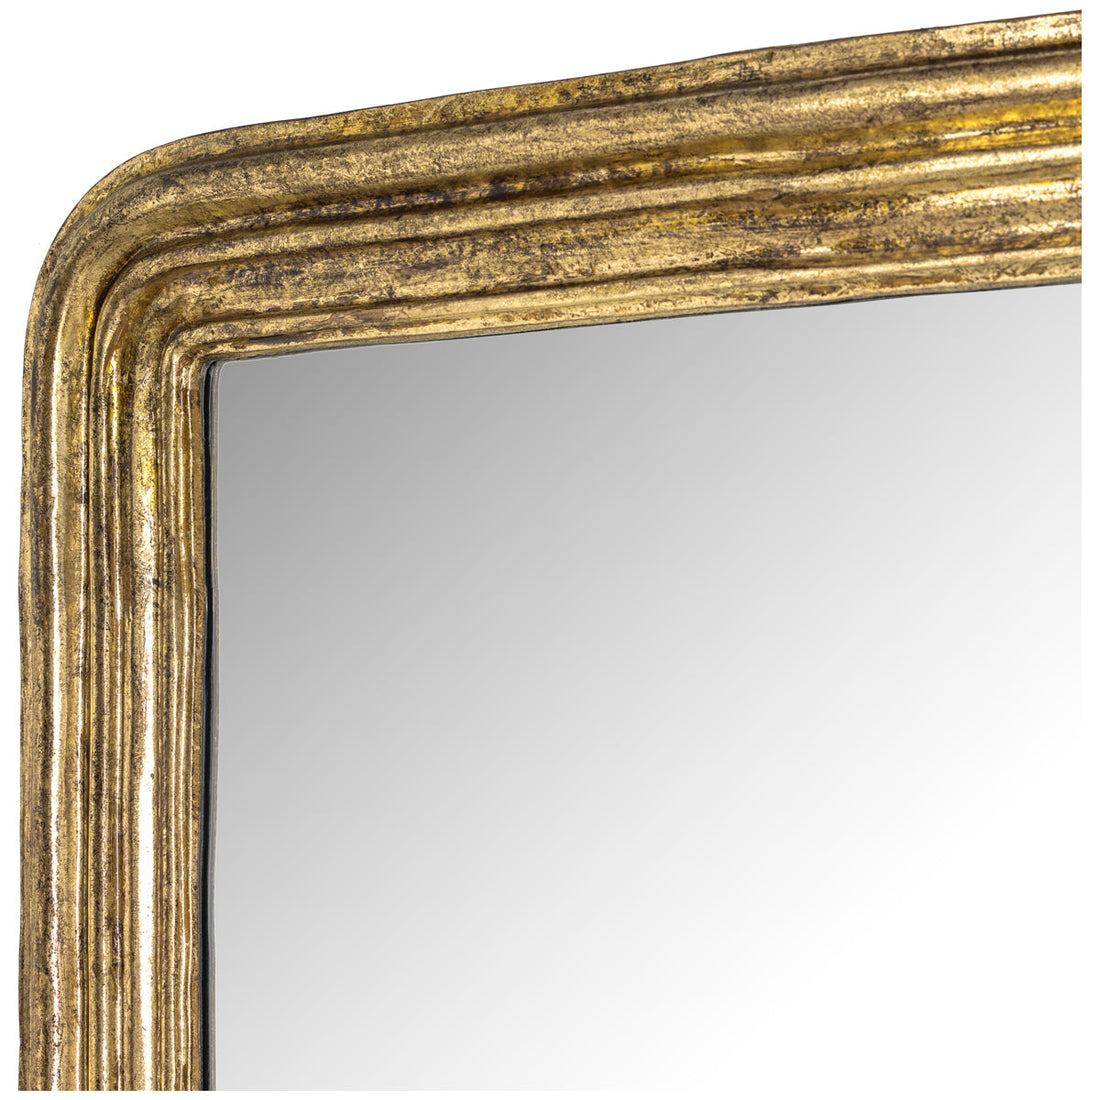 Four Hands Asher Vintage Louis Mirror - Antiqued Gold Leaf